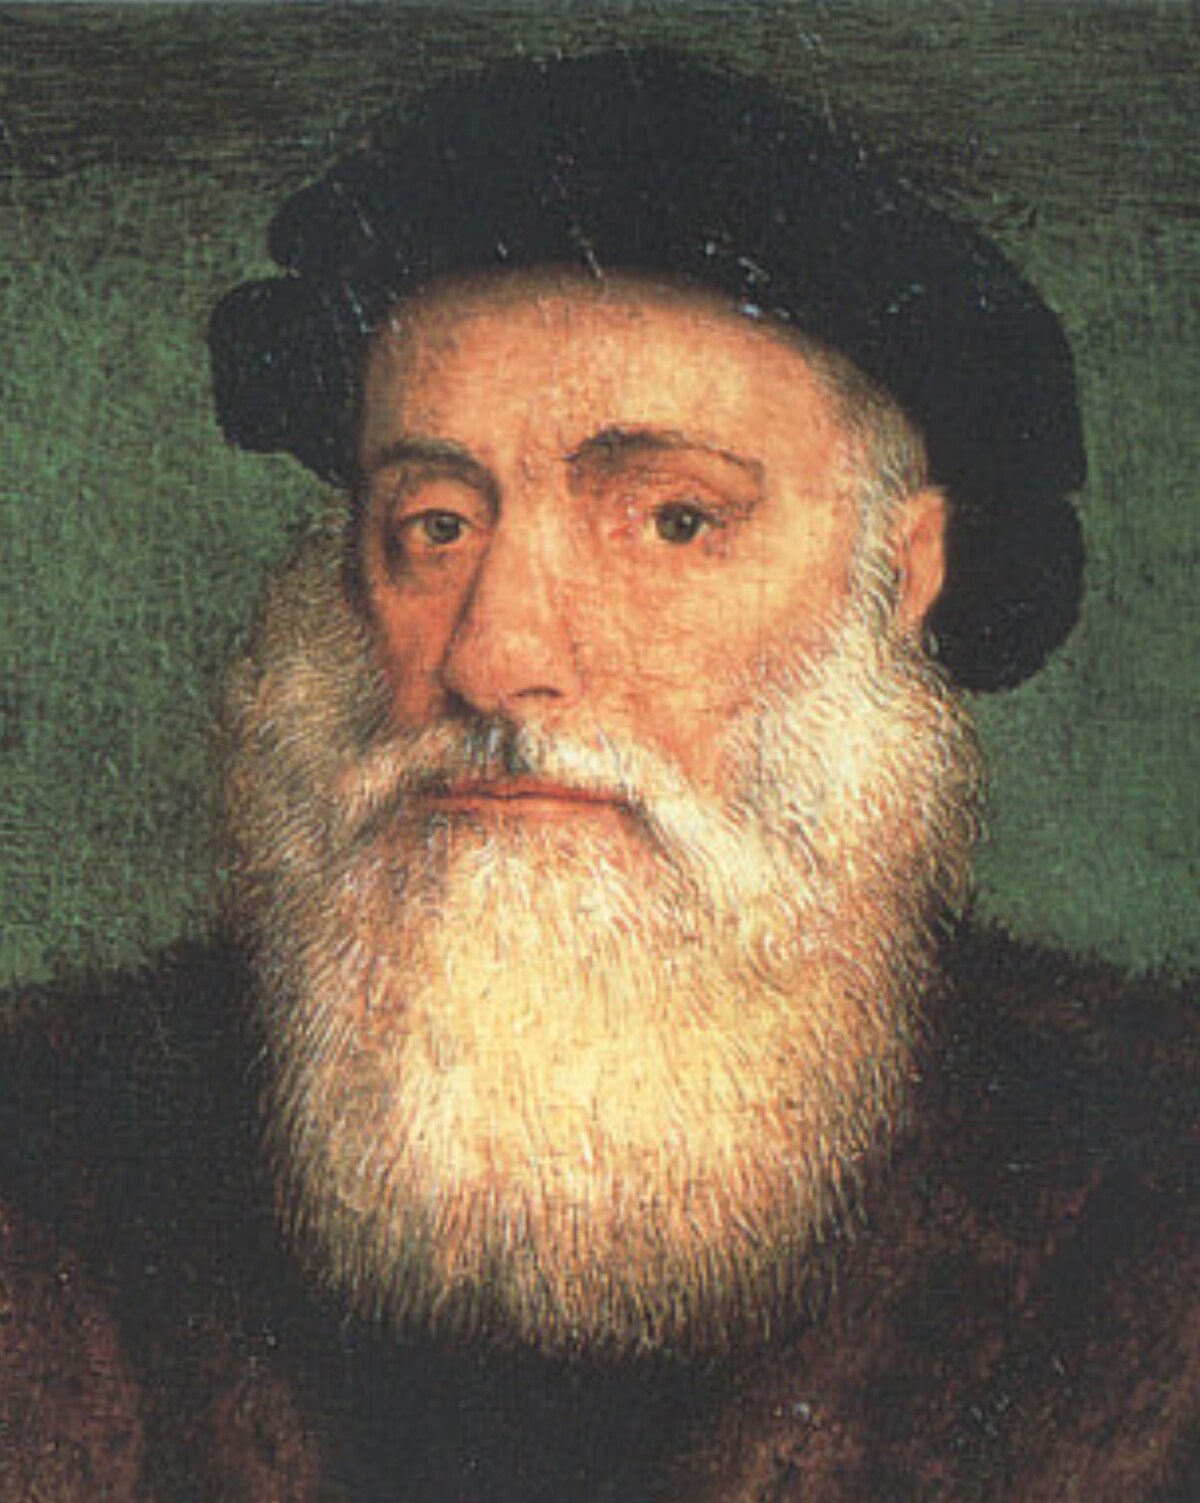 Vasco da Gama - Wikipedia